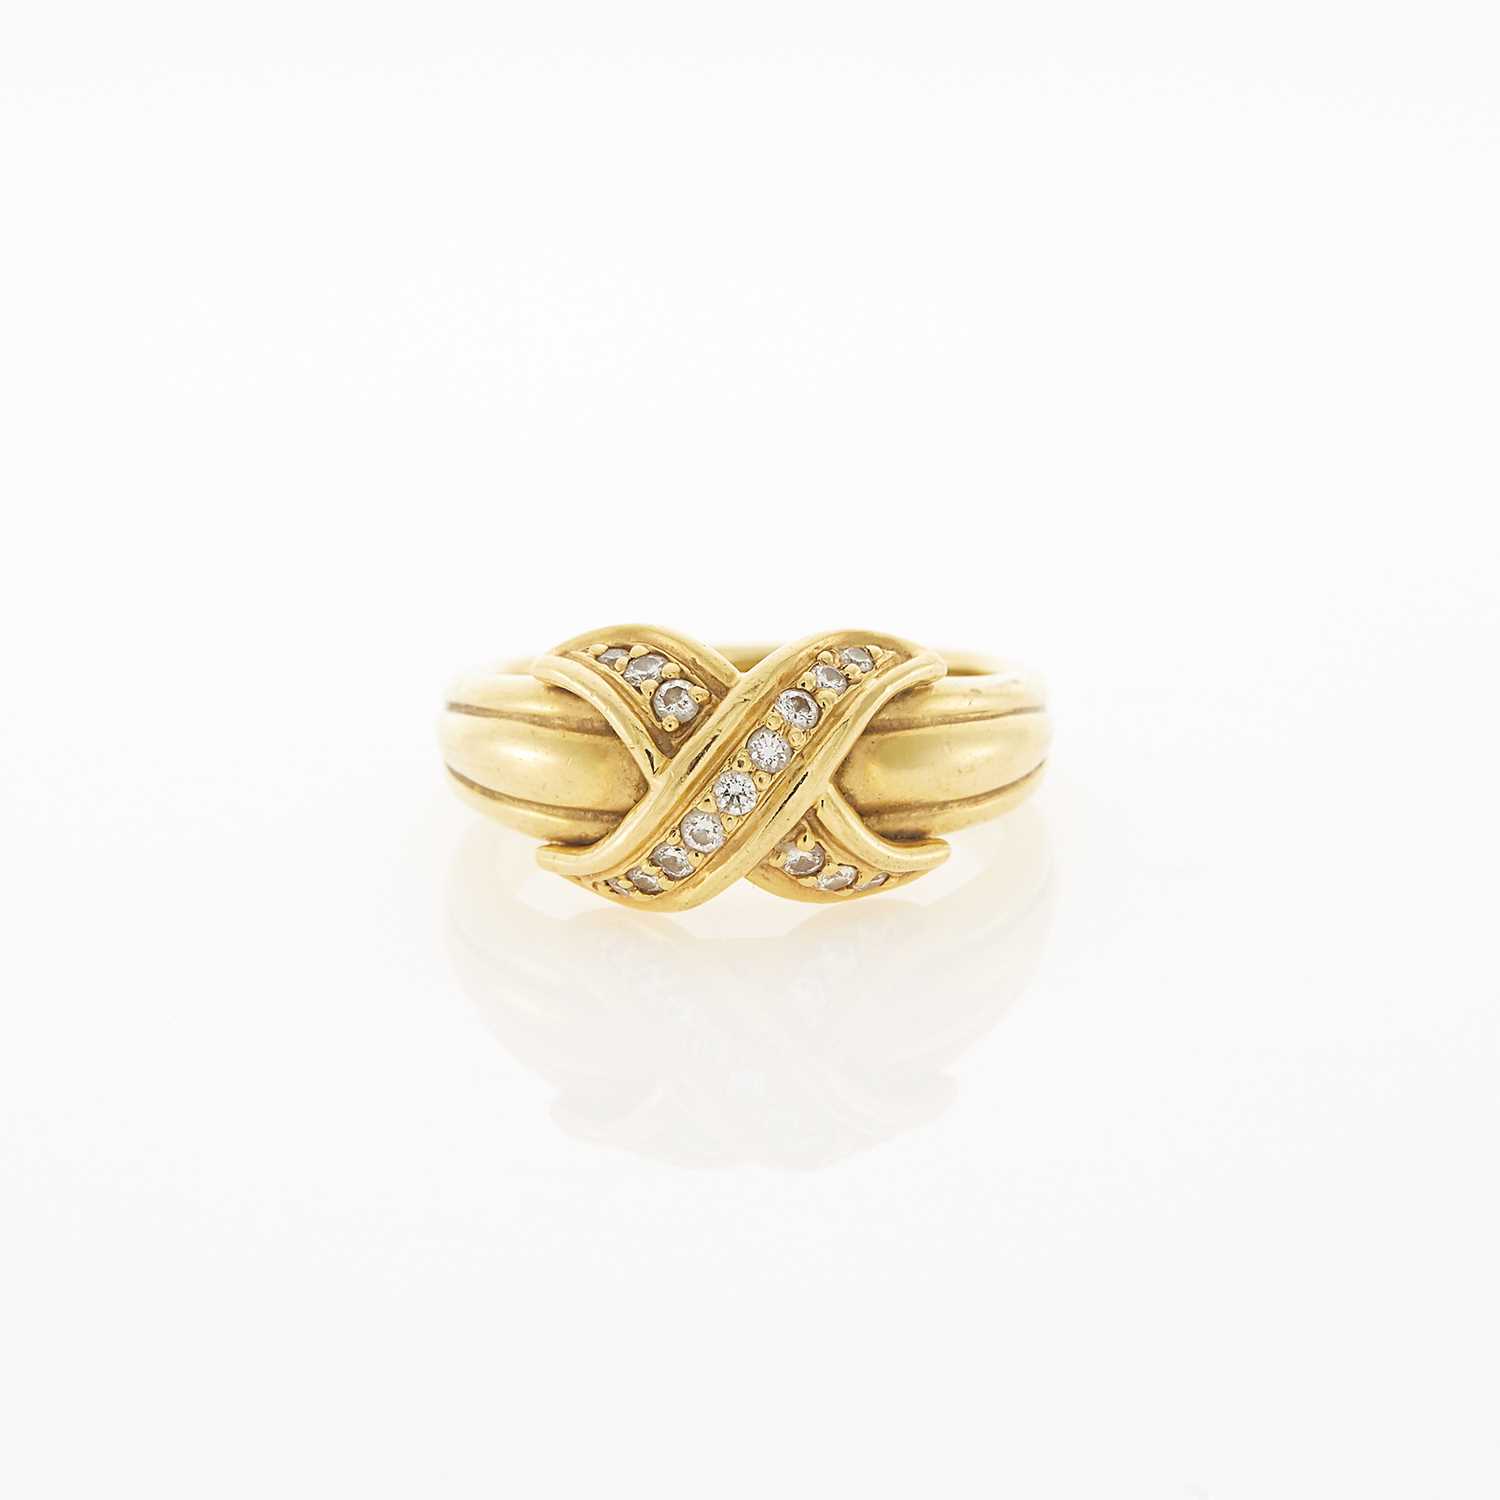 Lot 2087 - Tiffany & Co. Gold and Diamond 'X' Ring